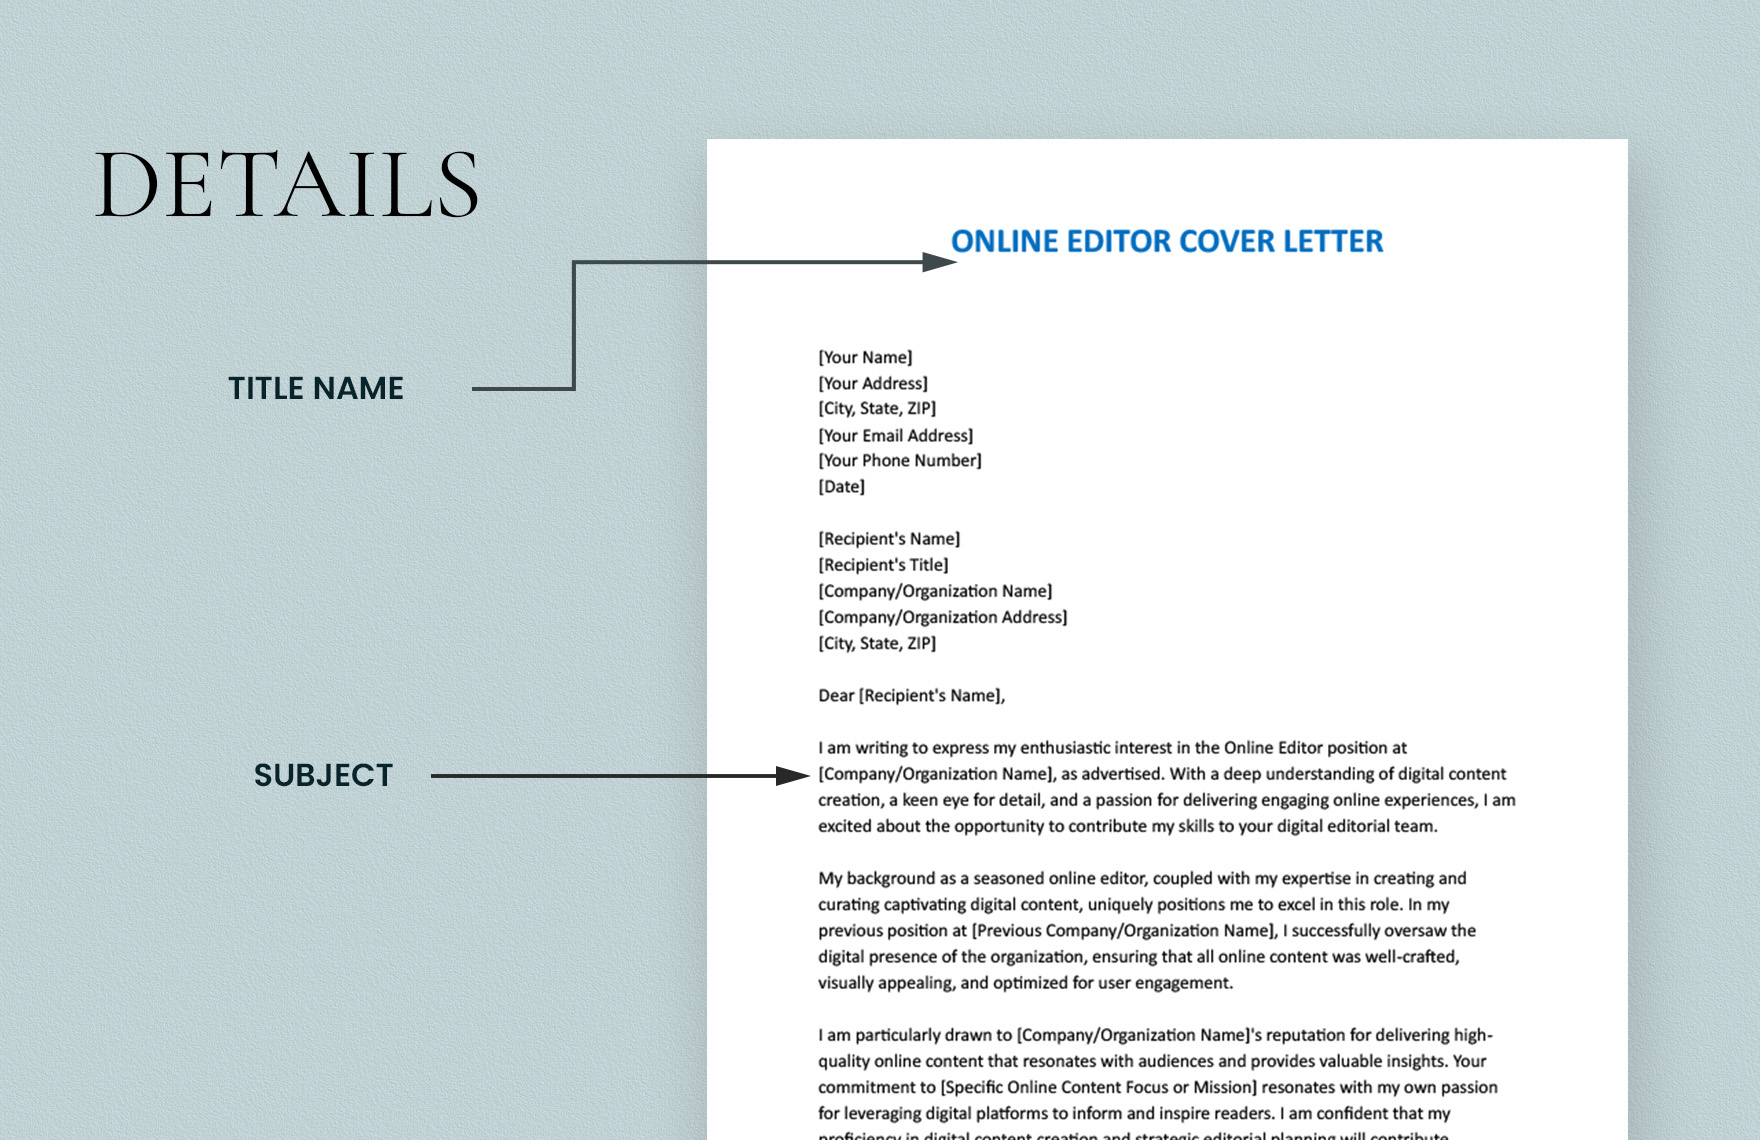 Online Editor Cover Letter